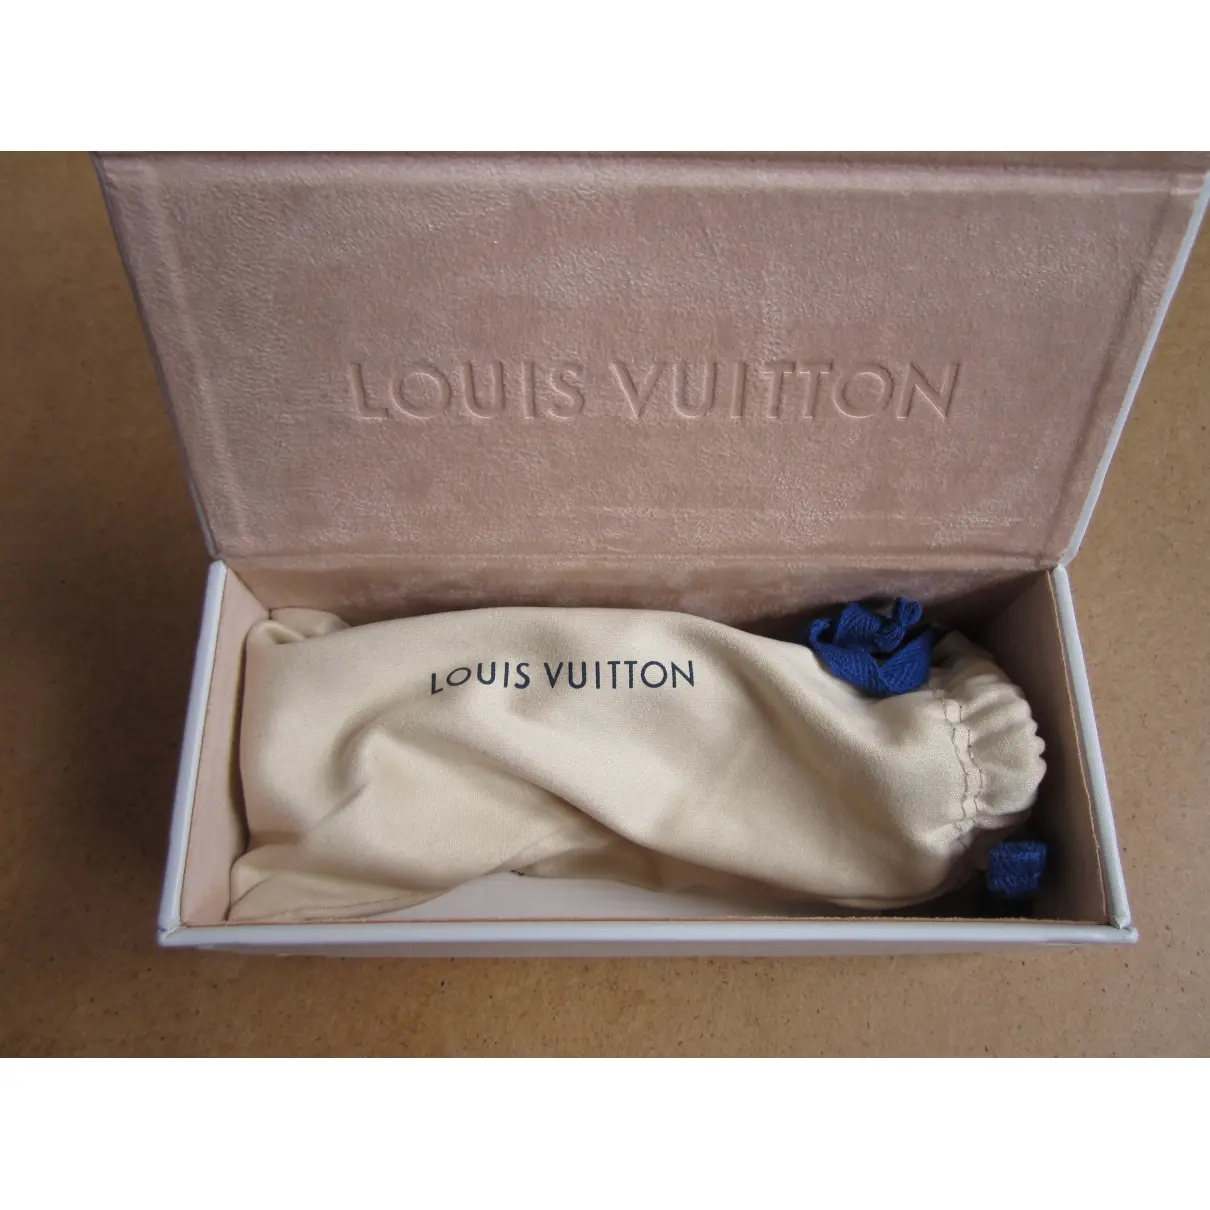 Luxury Louis Vuitton Sunglasses Men